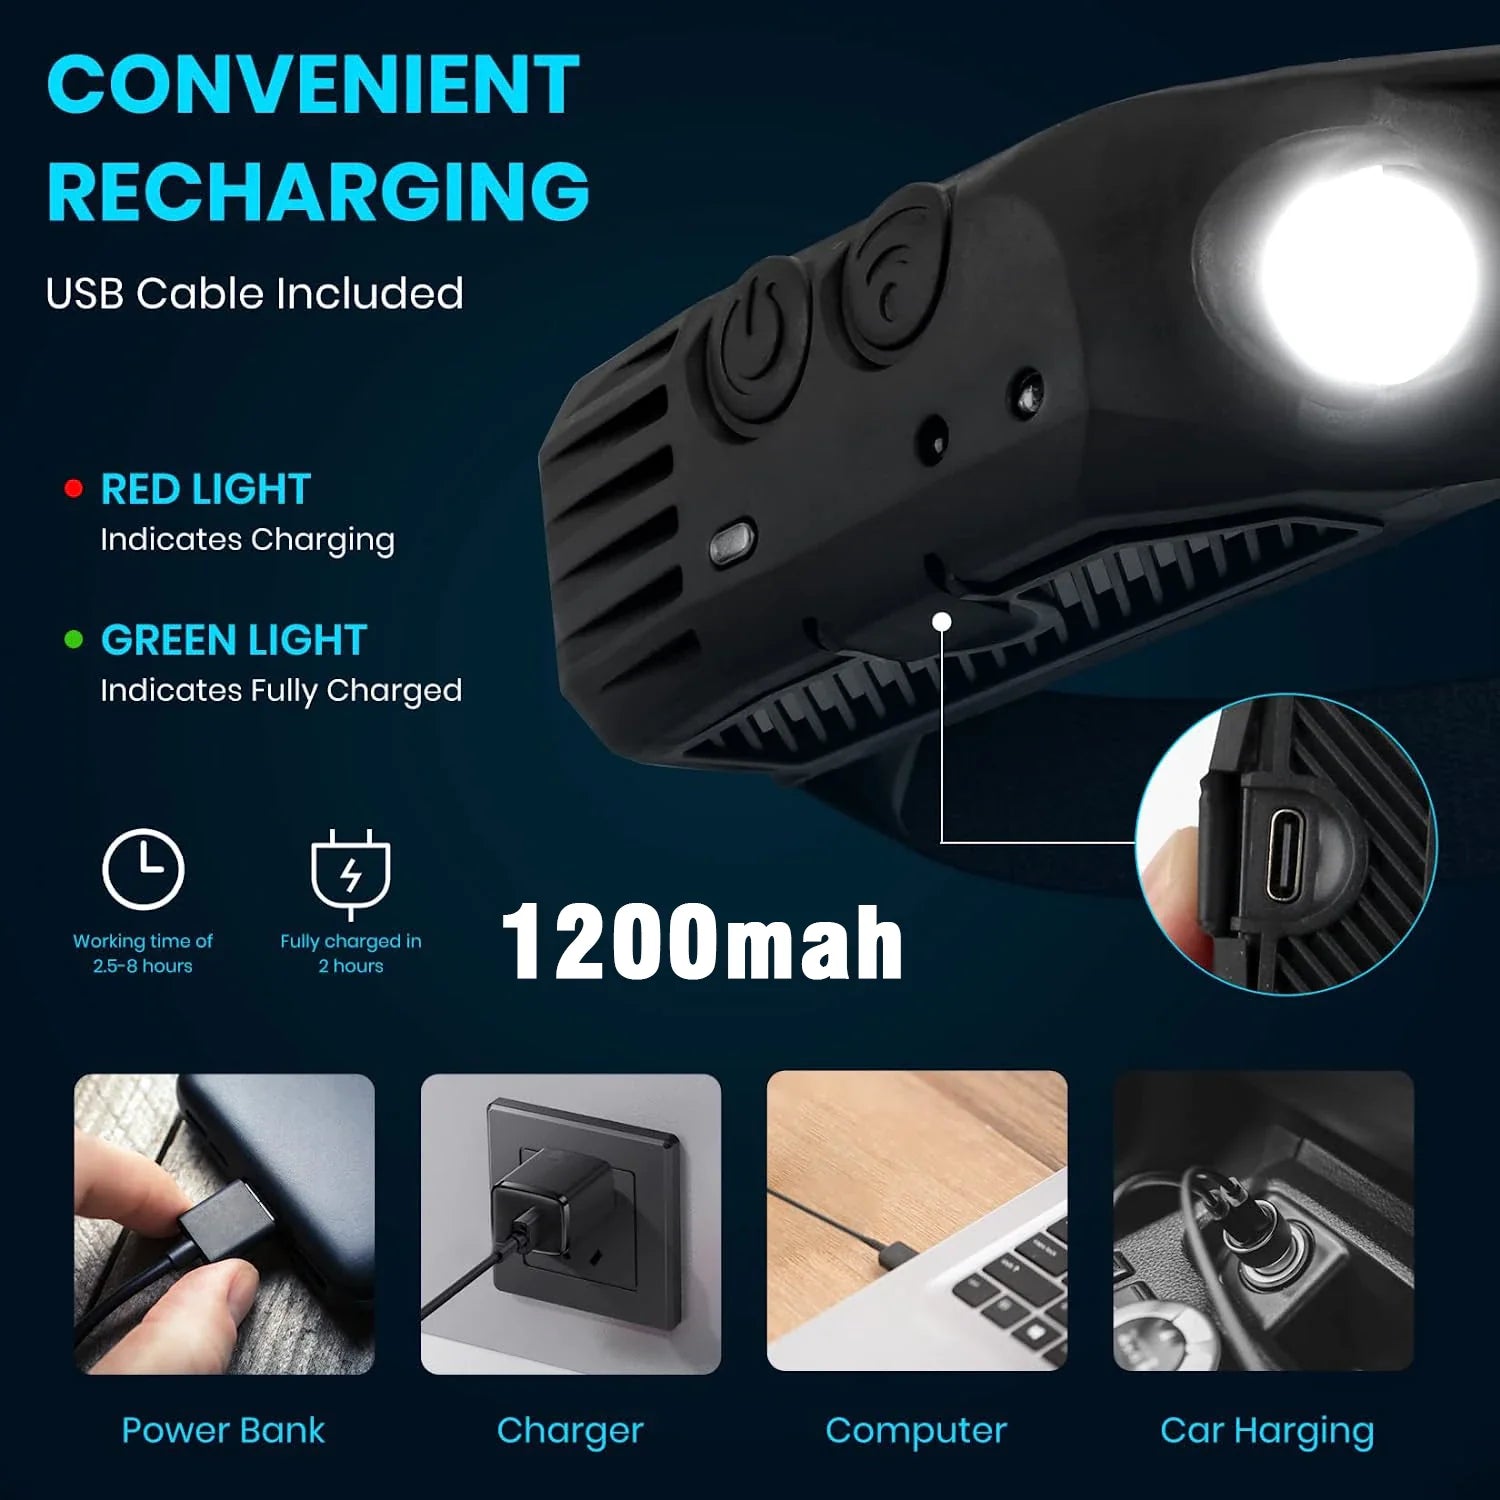 Sensor Headlamp COB LED Head Lamp Flashlight USB Rechargeable Head Torch 5 Lighting Modes Head Light with Built-In Battery